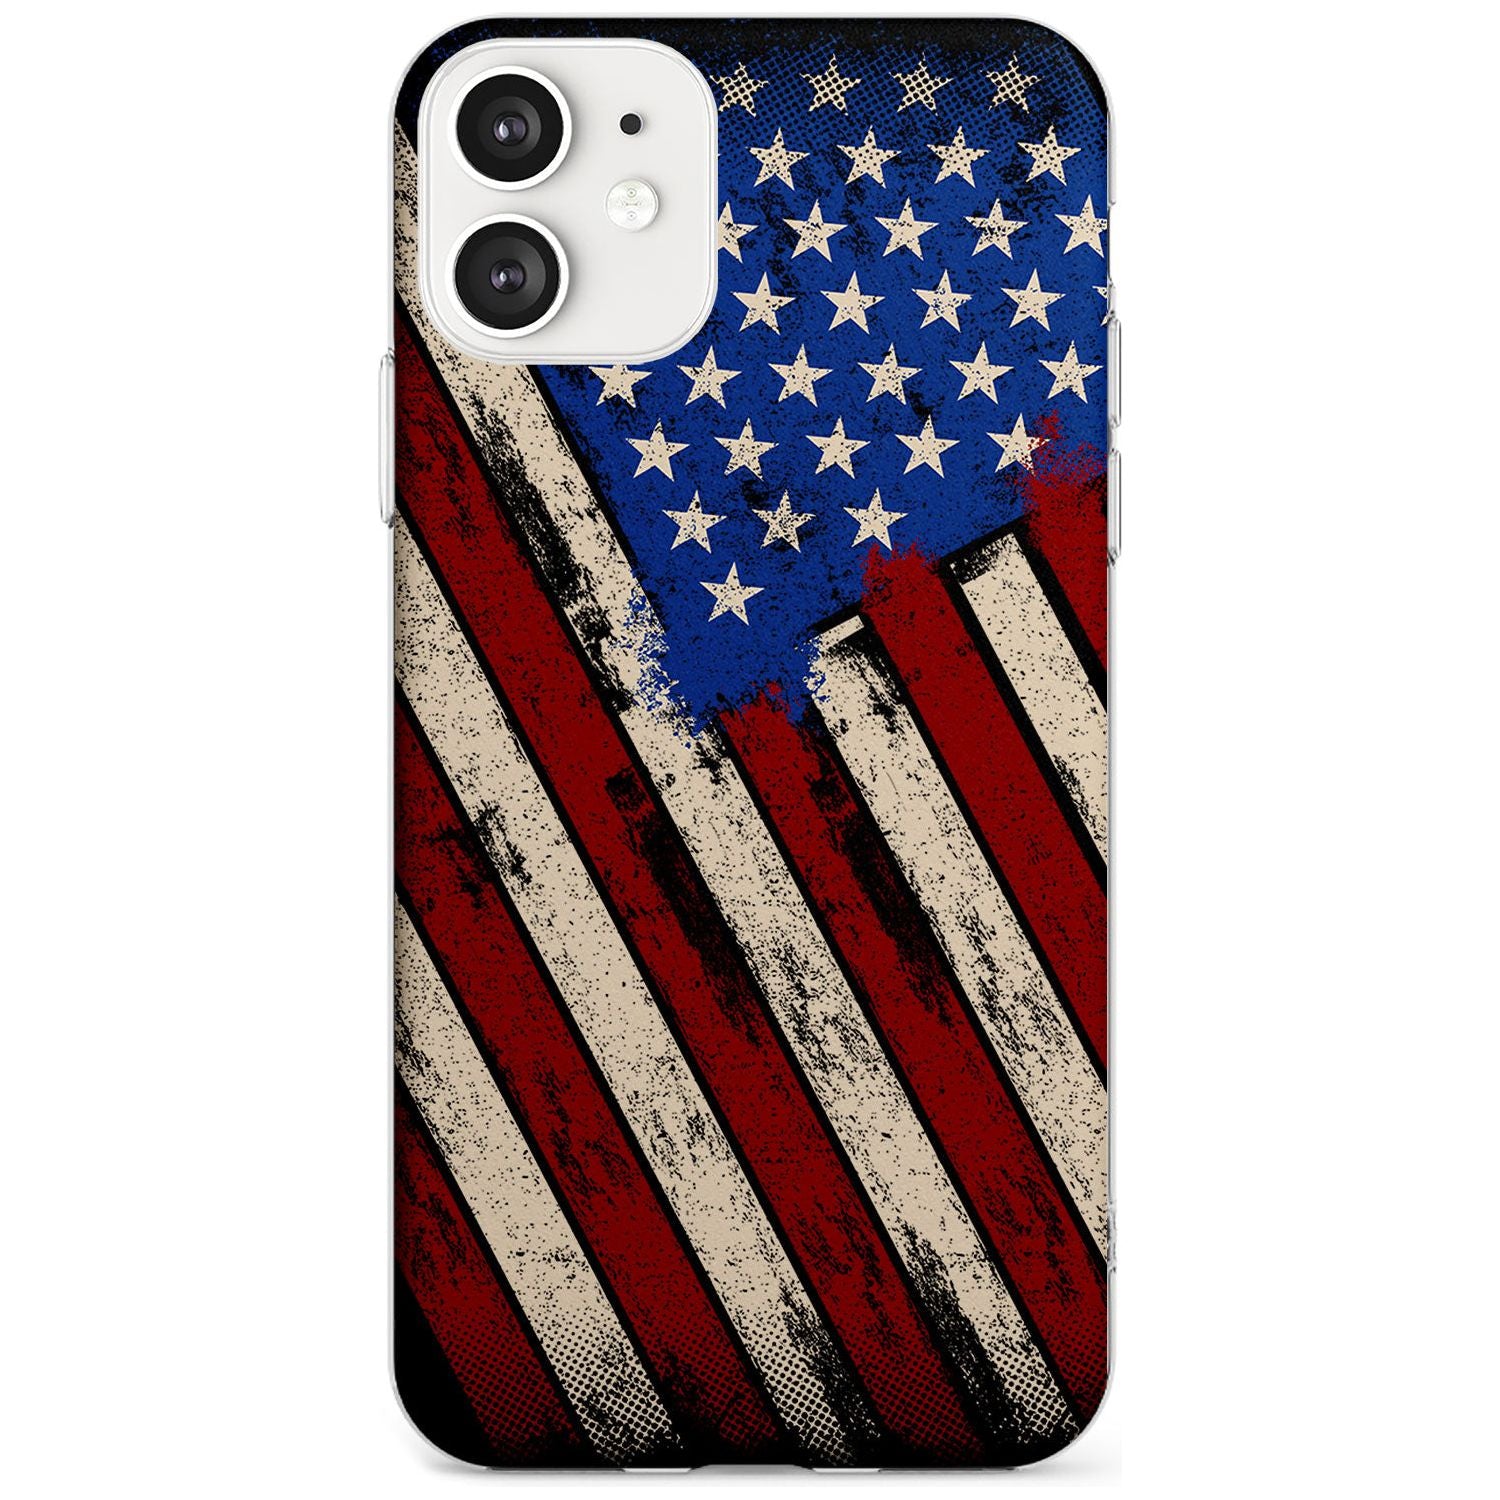 Distressed US Flag Slim TPU Phone Case for iPhone 11